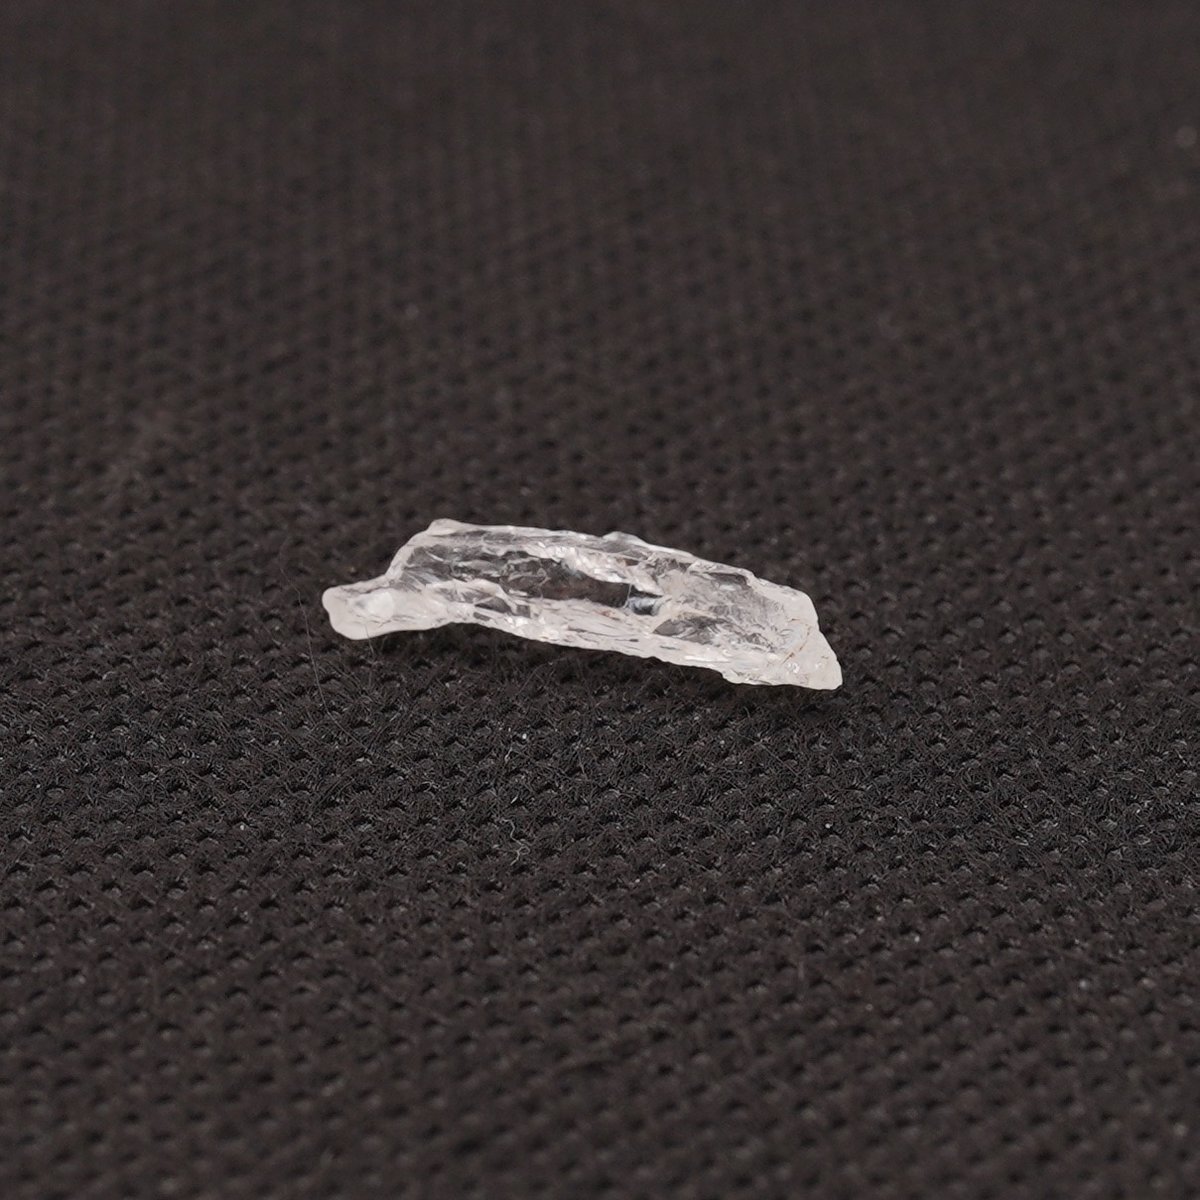 Fenacit nigerian cristal natural unicat f181